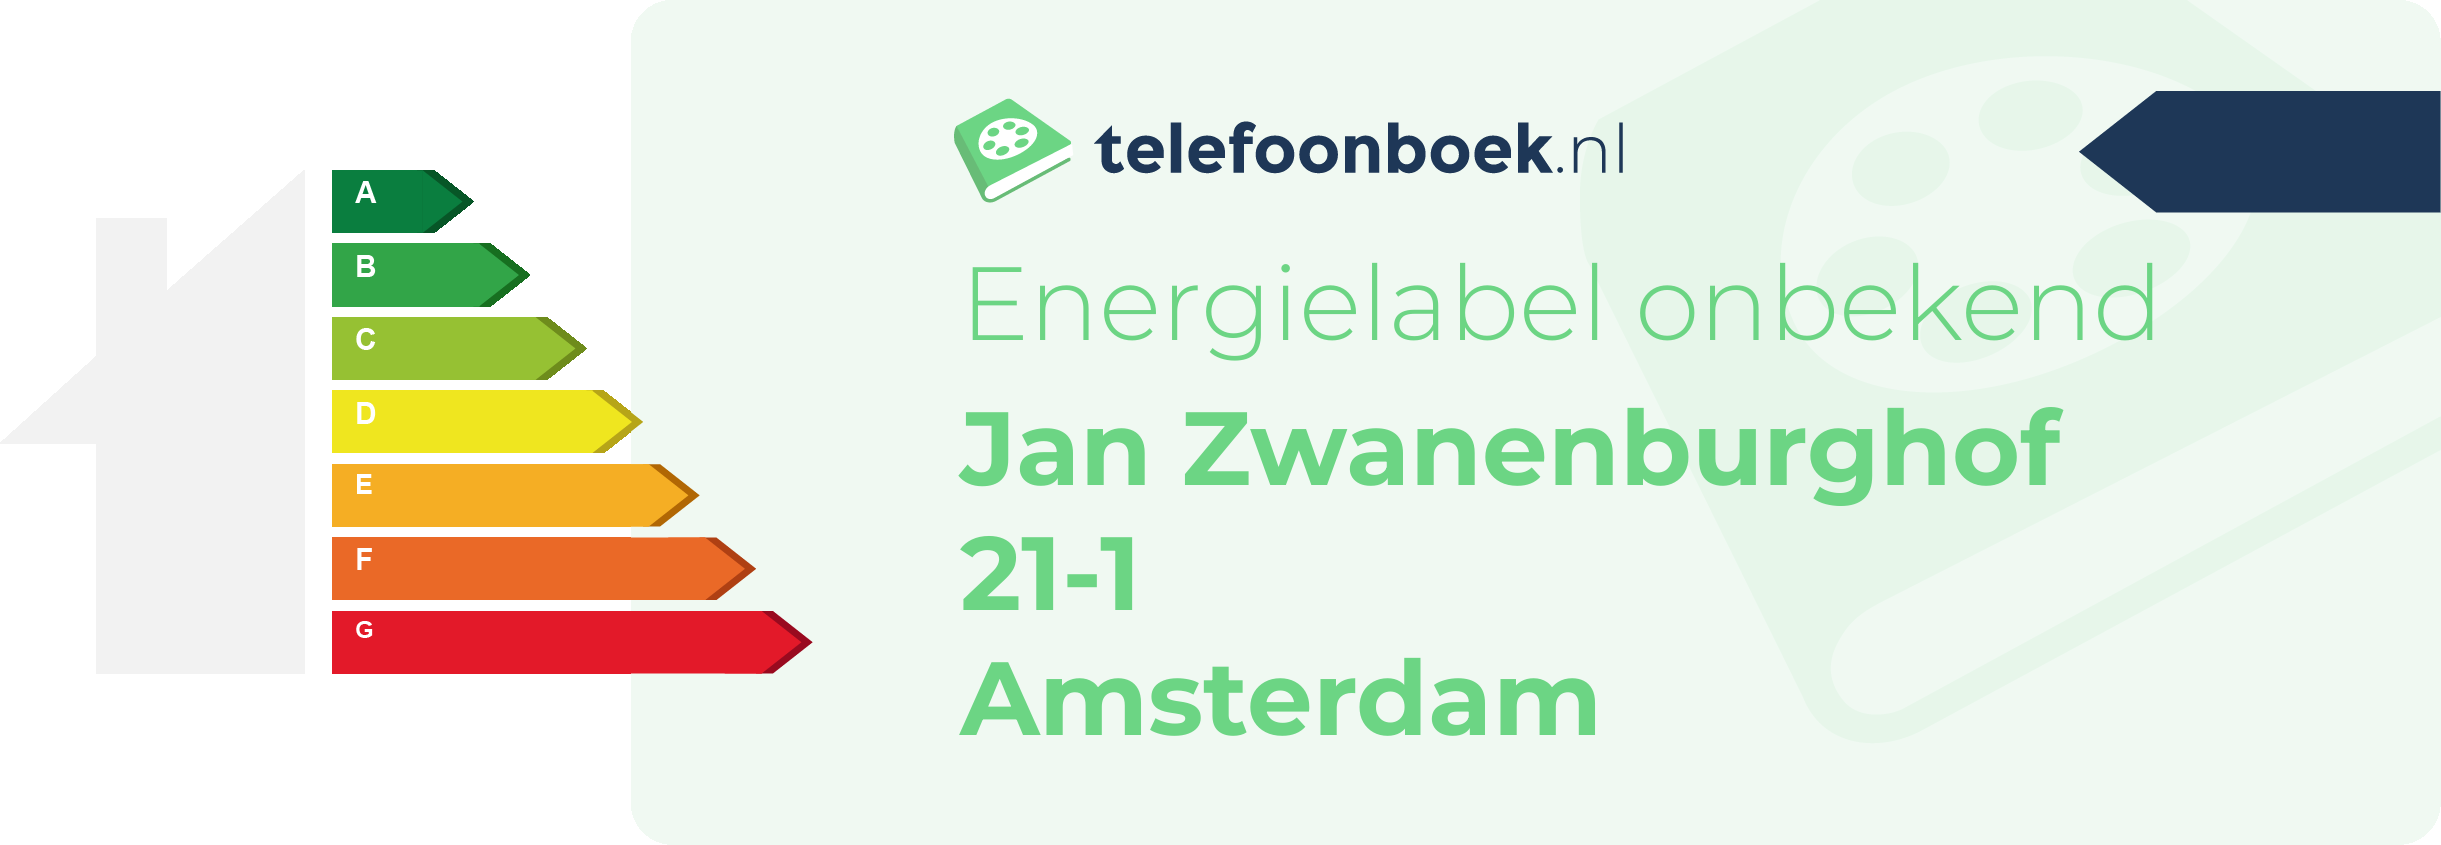 Energielabel Jan Zwanenburghof 21-1 Amsterdam